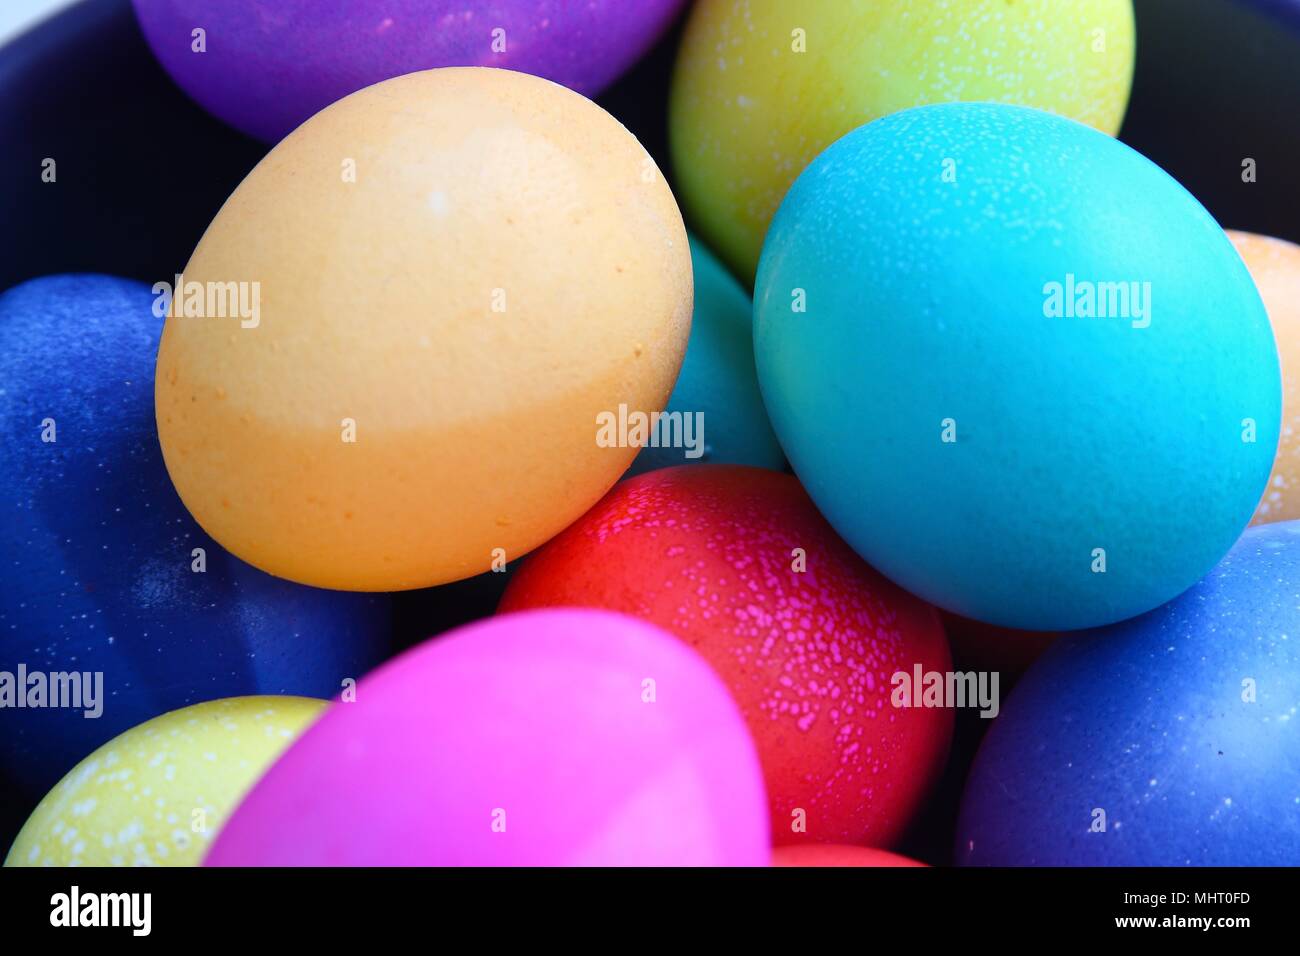 Grupo de huevos de pascua de colores brillantes, en un montón, close-up Foto de stock